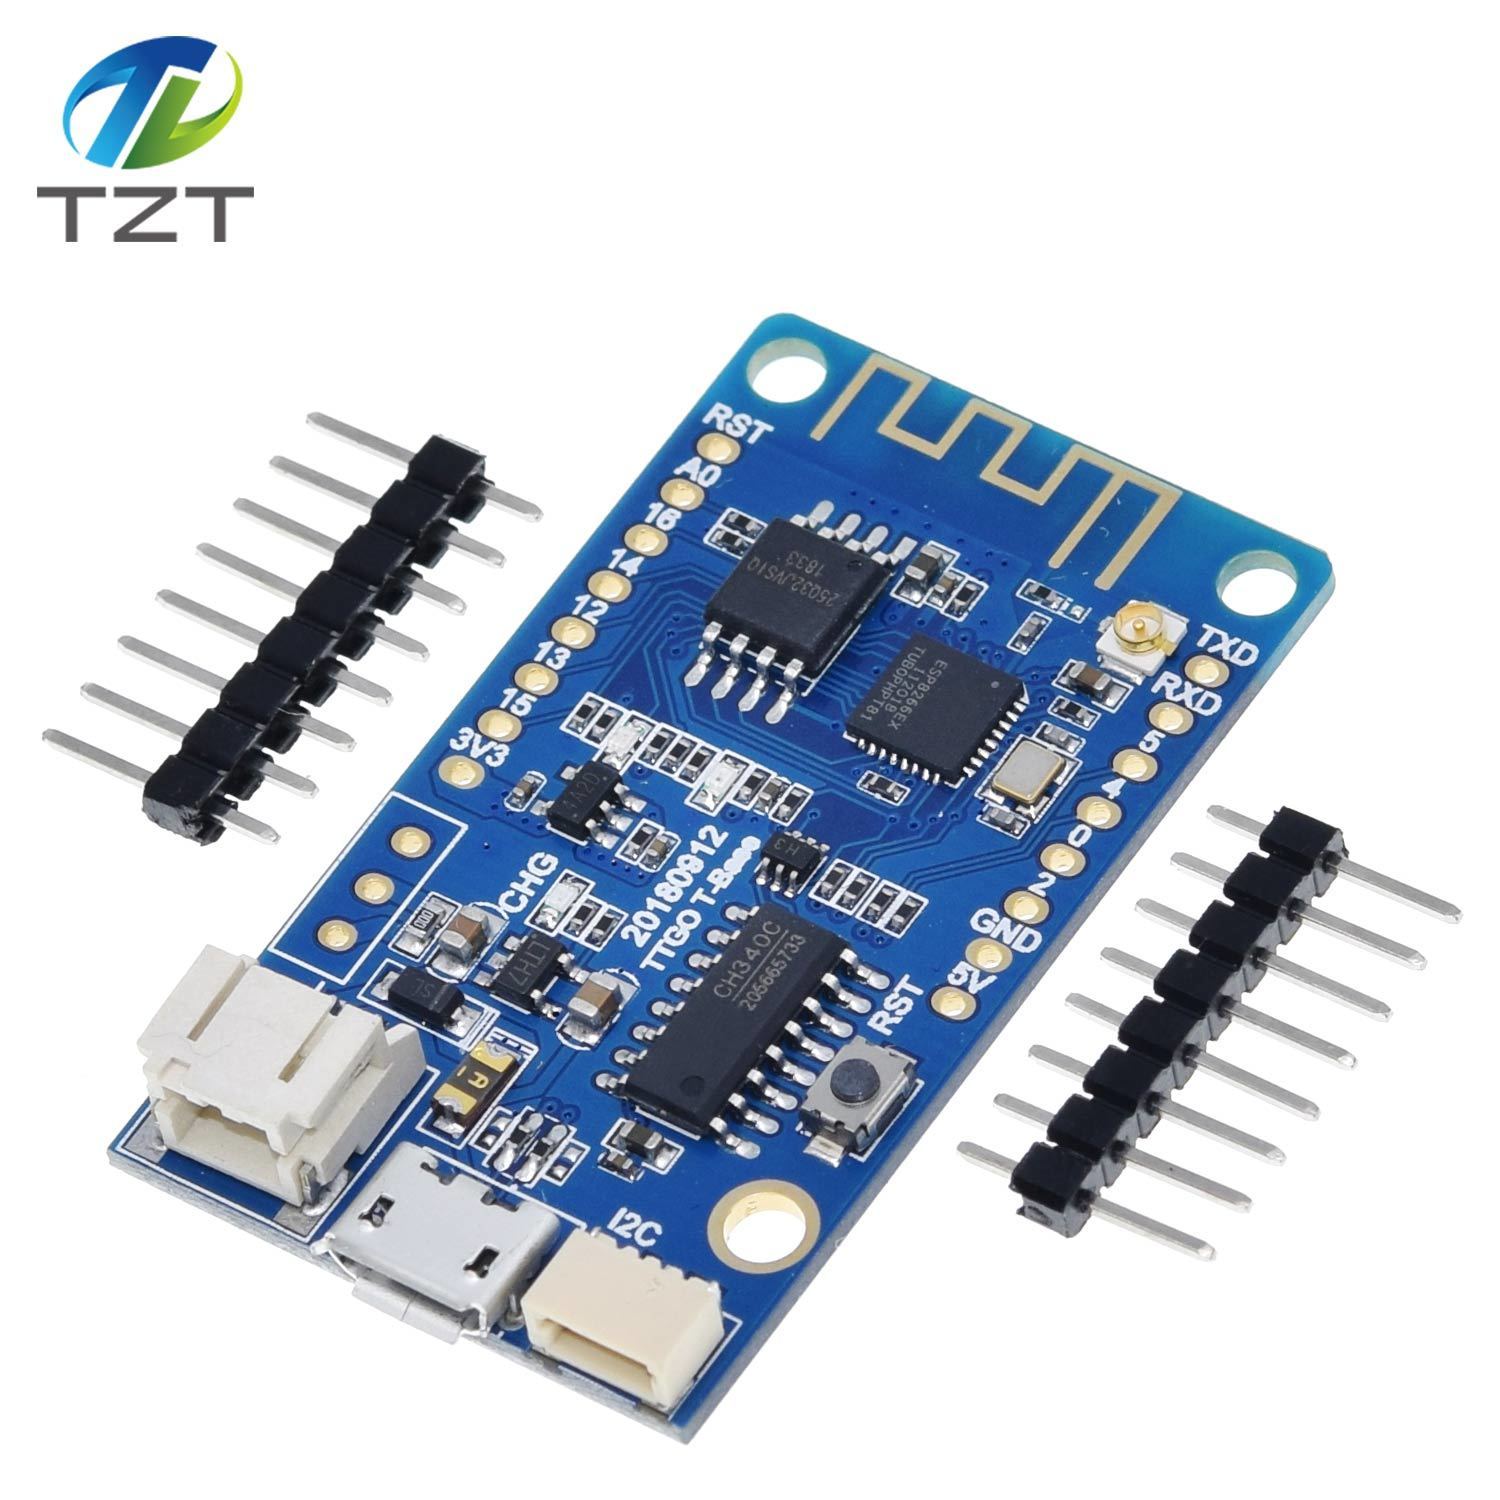 TZT TTGO T-Base ESP8266 WiFi Wireless Module 4MB Flash I2C Port for Arduino MicroPython NodeMCU Compatible